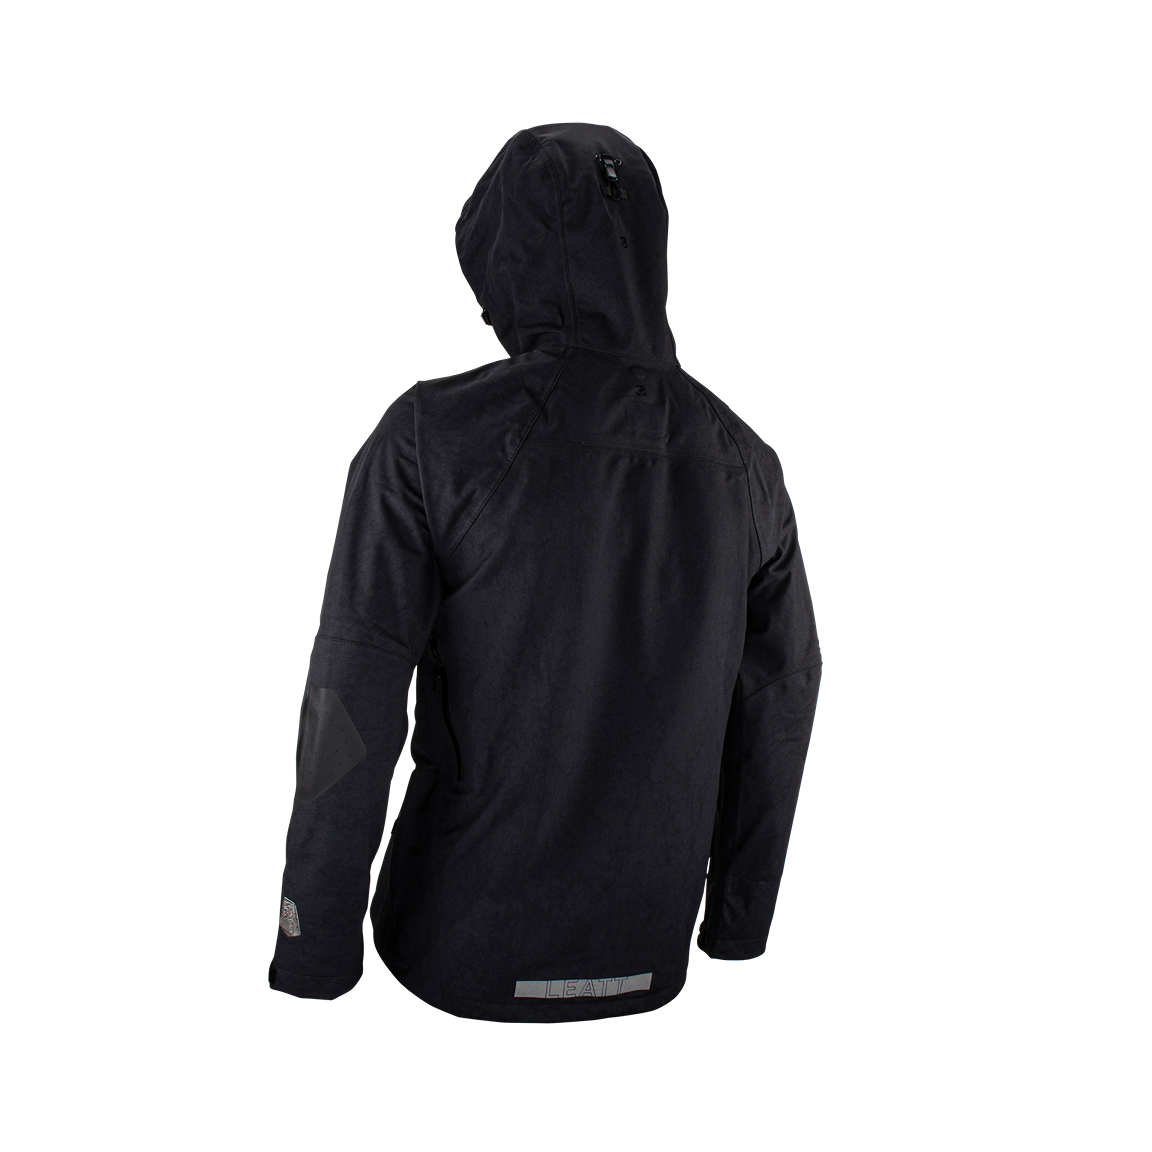 Leatt Jacket MTB HydraDri 5.0 Black